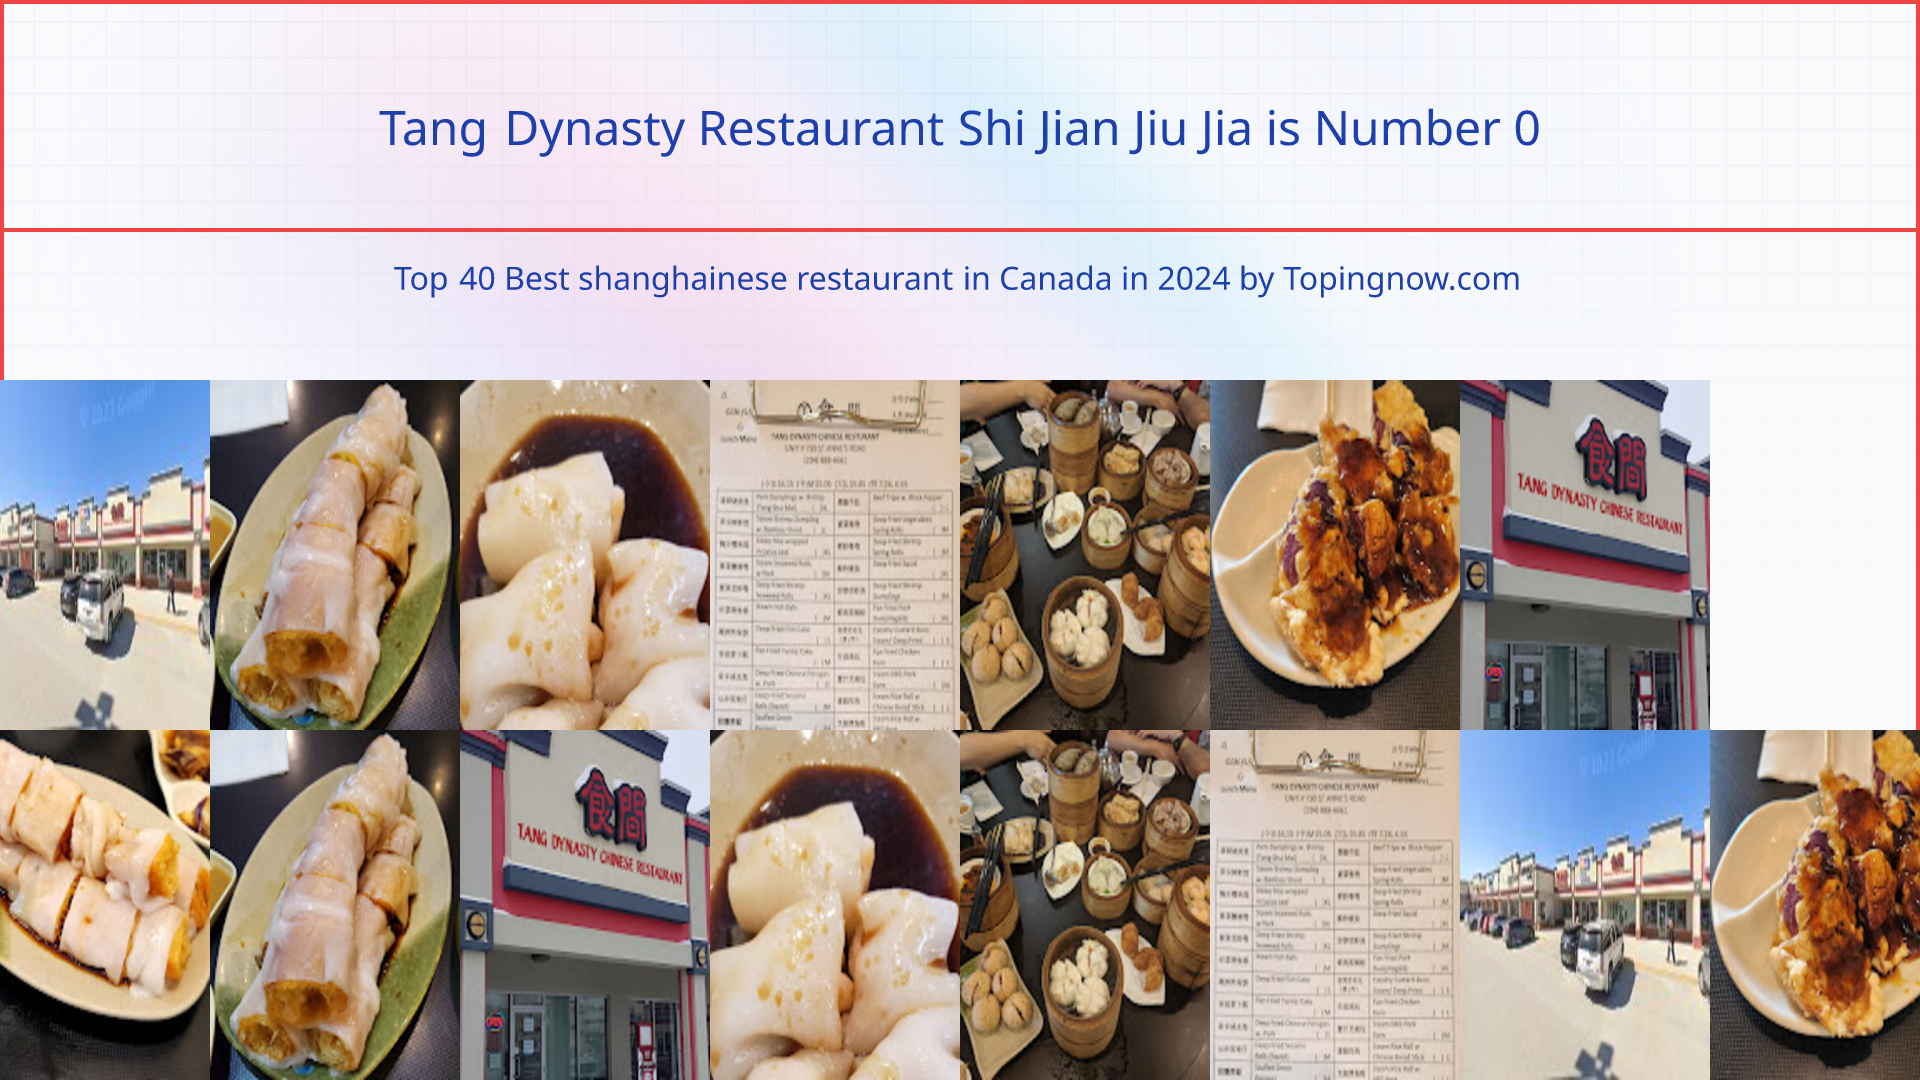 Tang Dynasty Restaurant Shi Jian Jiu Jia: Top 40 Best shanghainese restaurant in Canada in 2024